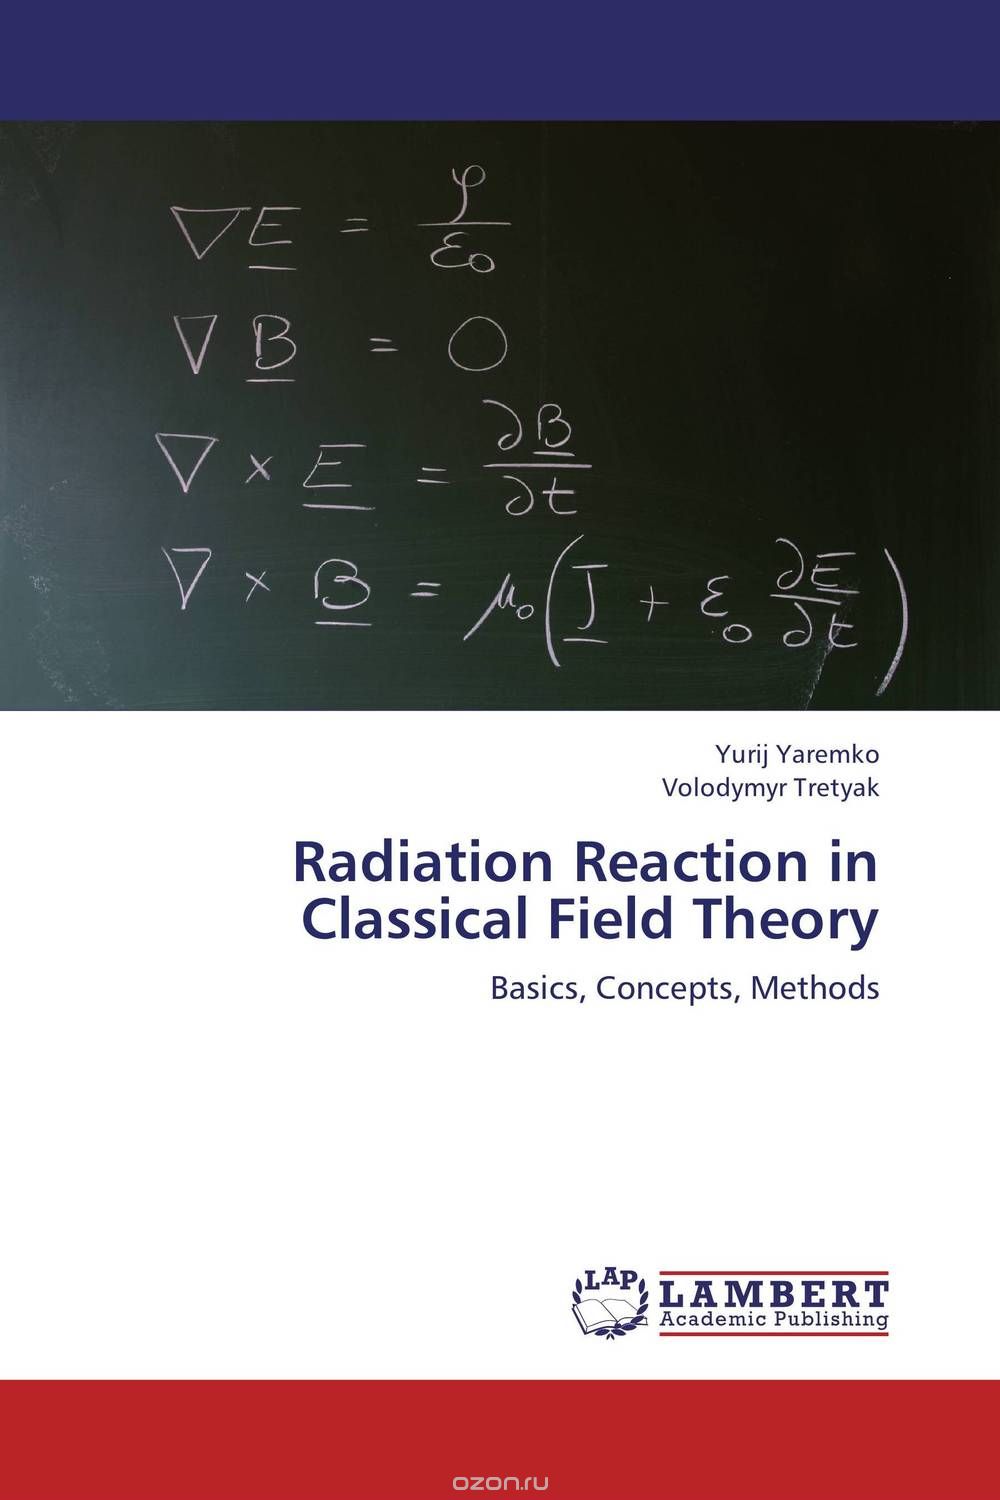 Скачать книгу "Radiation Reaction in Classical Field Theory"